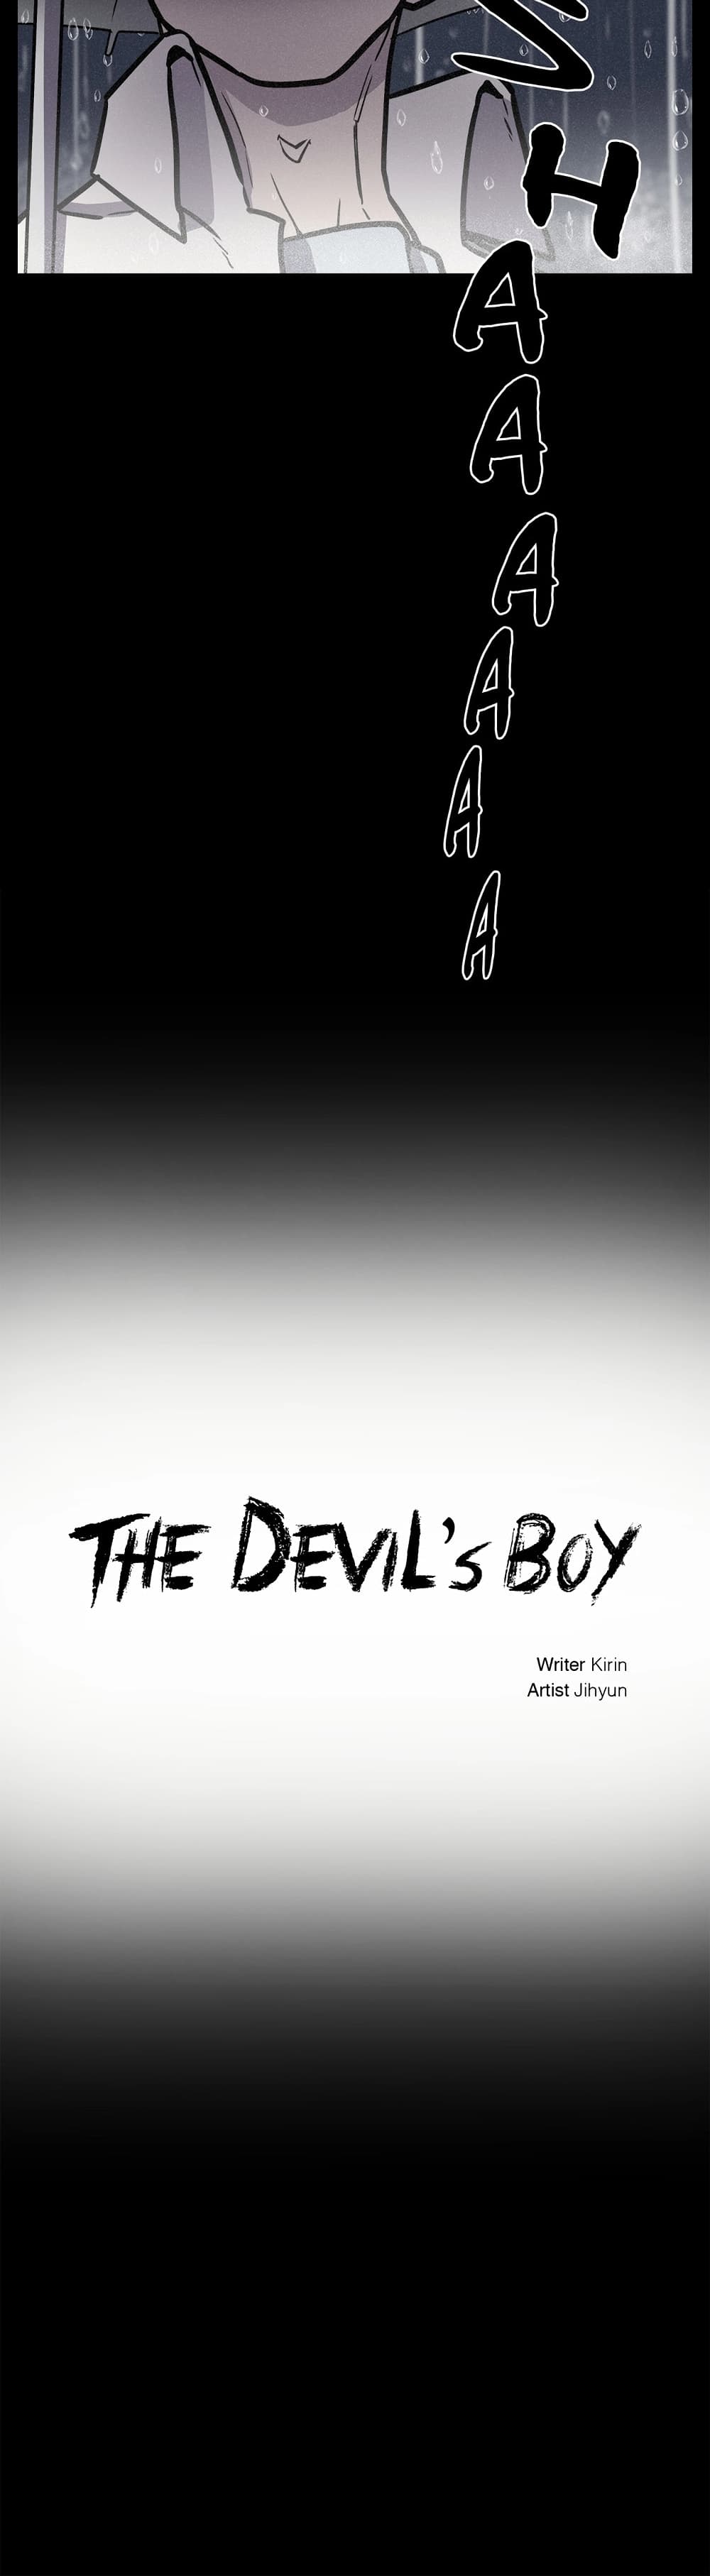 The Devil’s Boy13 (3)